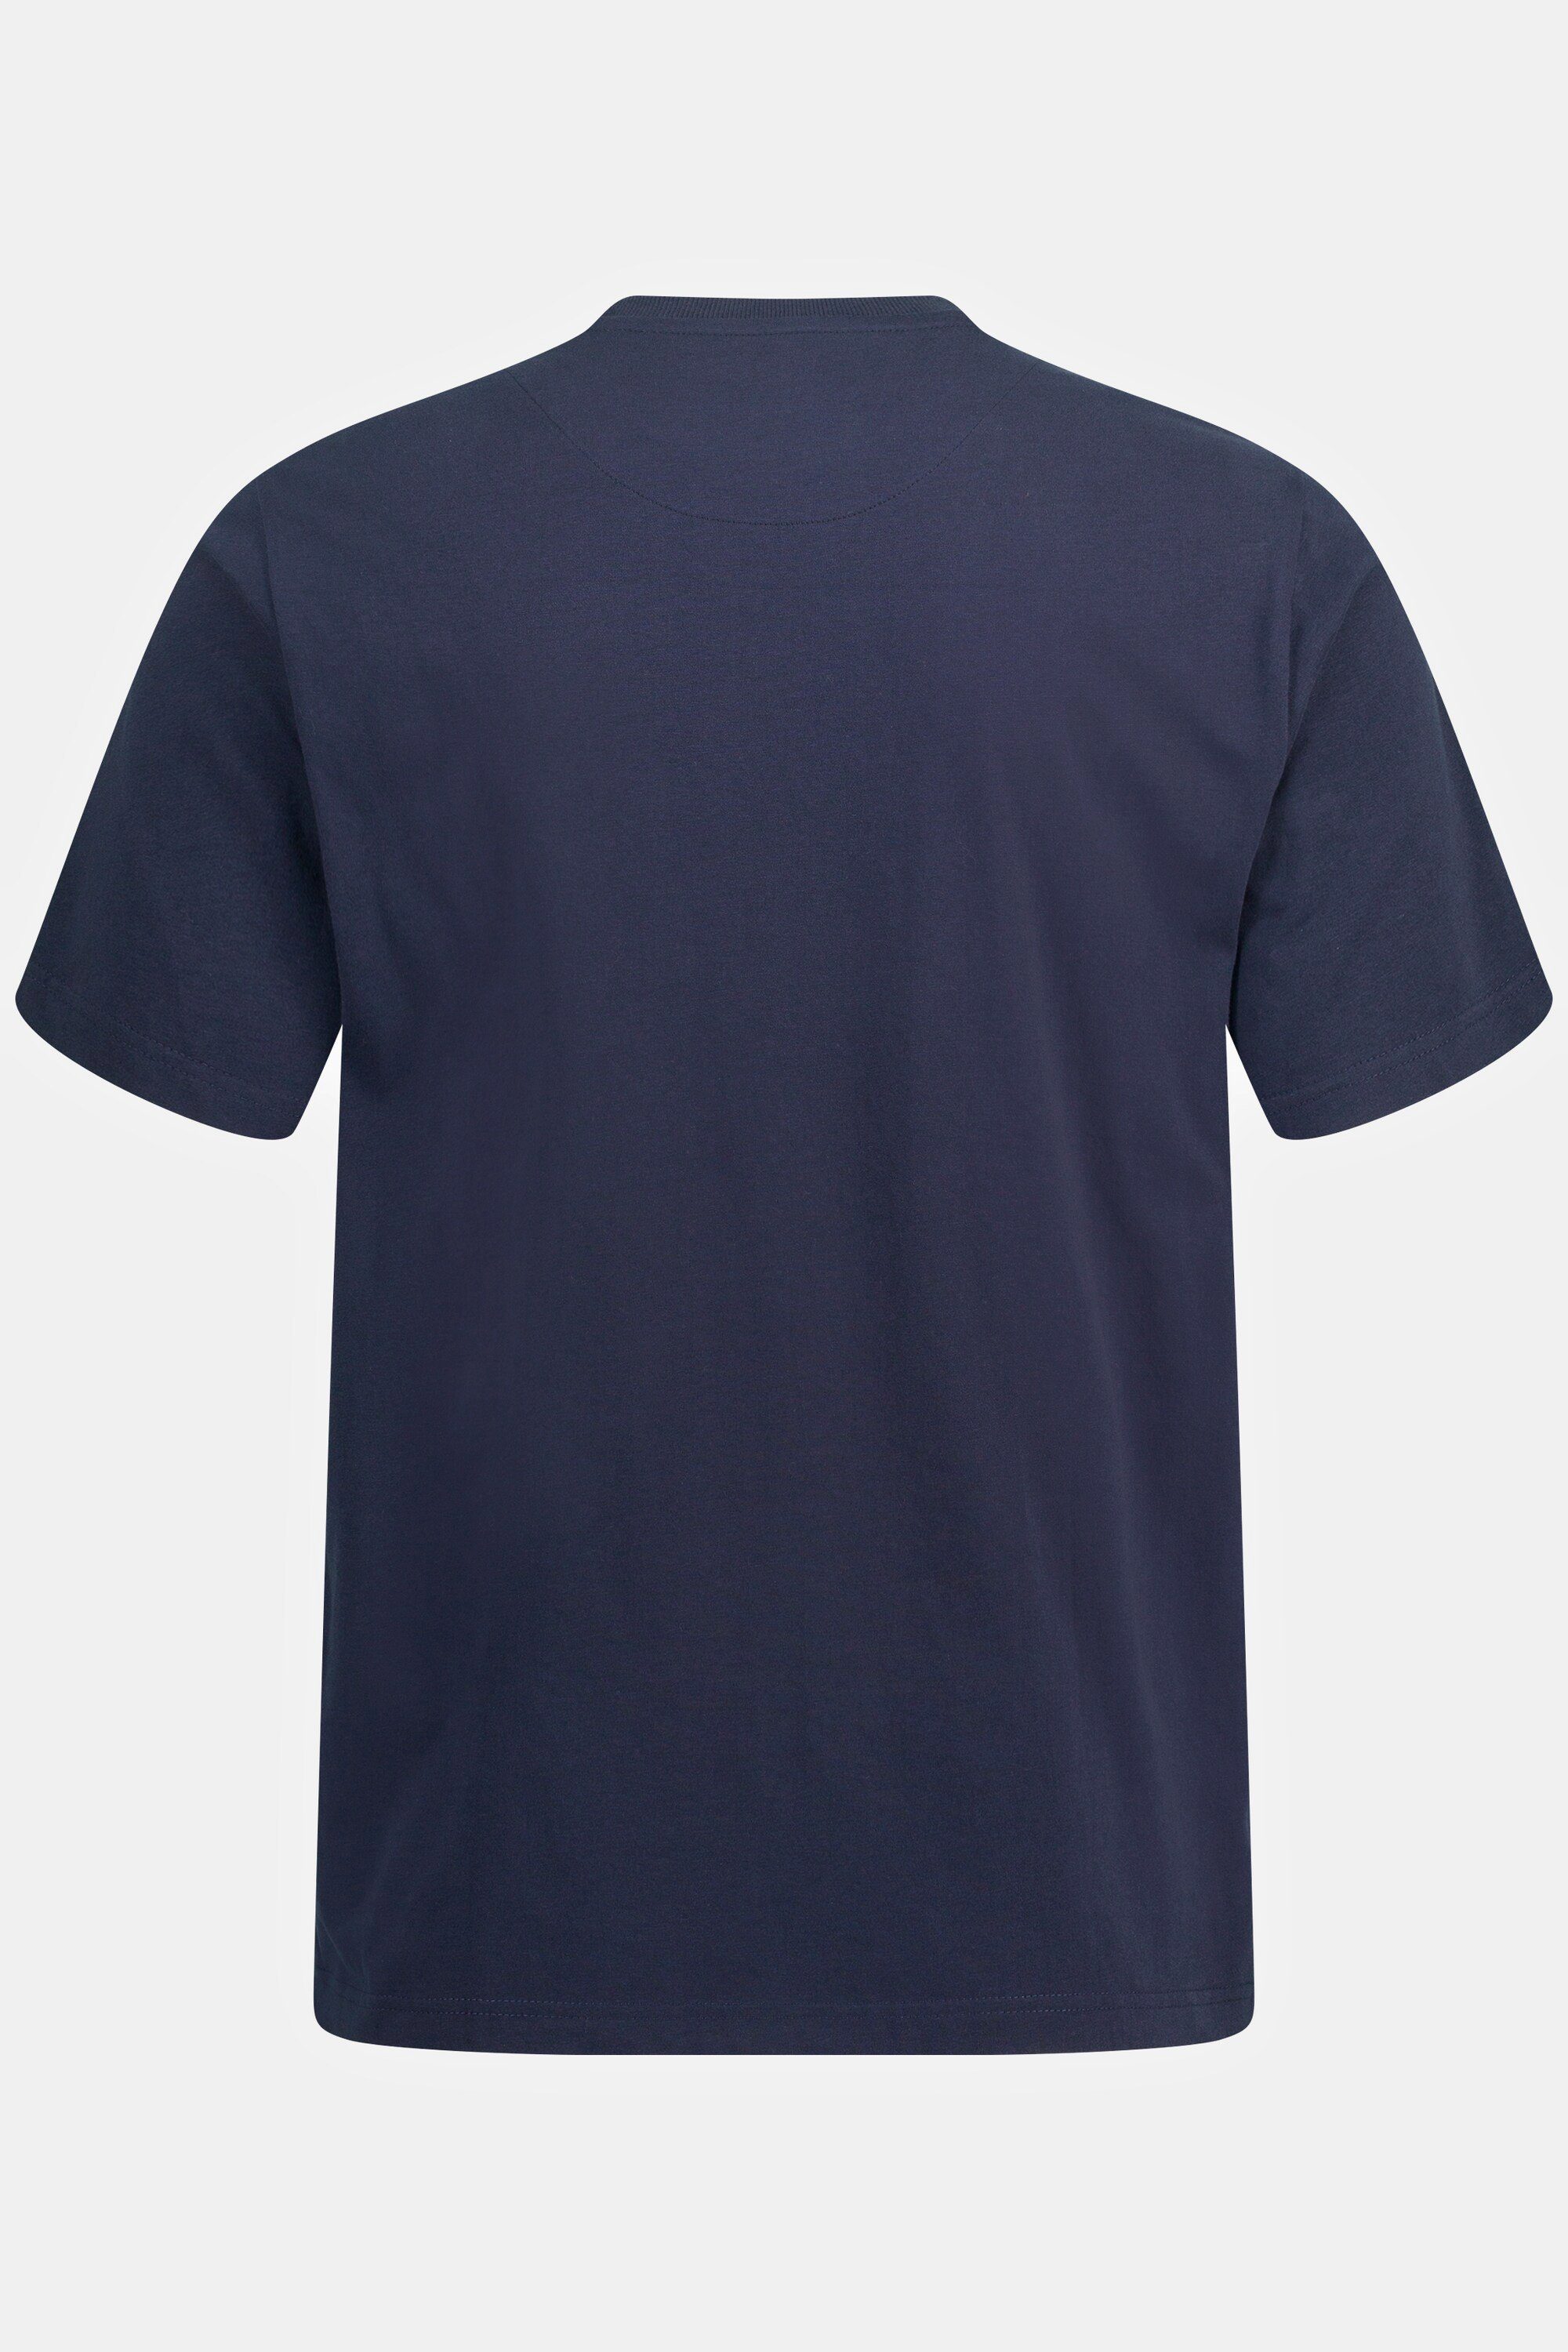 Halbarm Rundhals JP1880 T-Shirt Brustprint T-Shirt